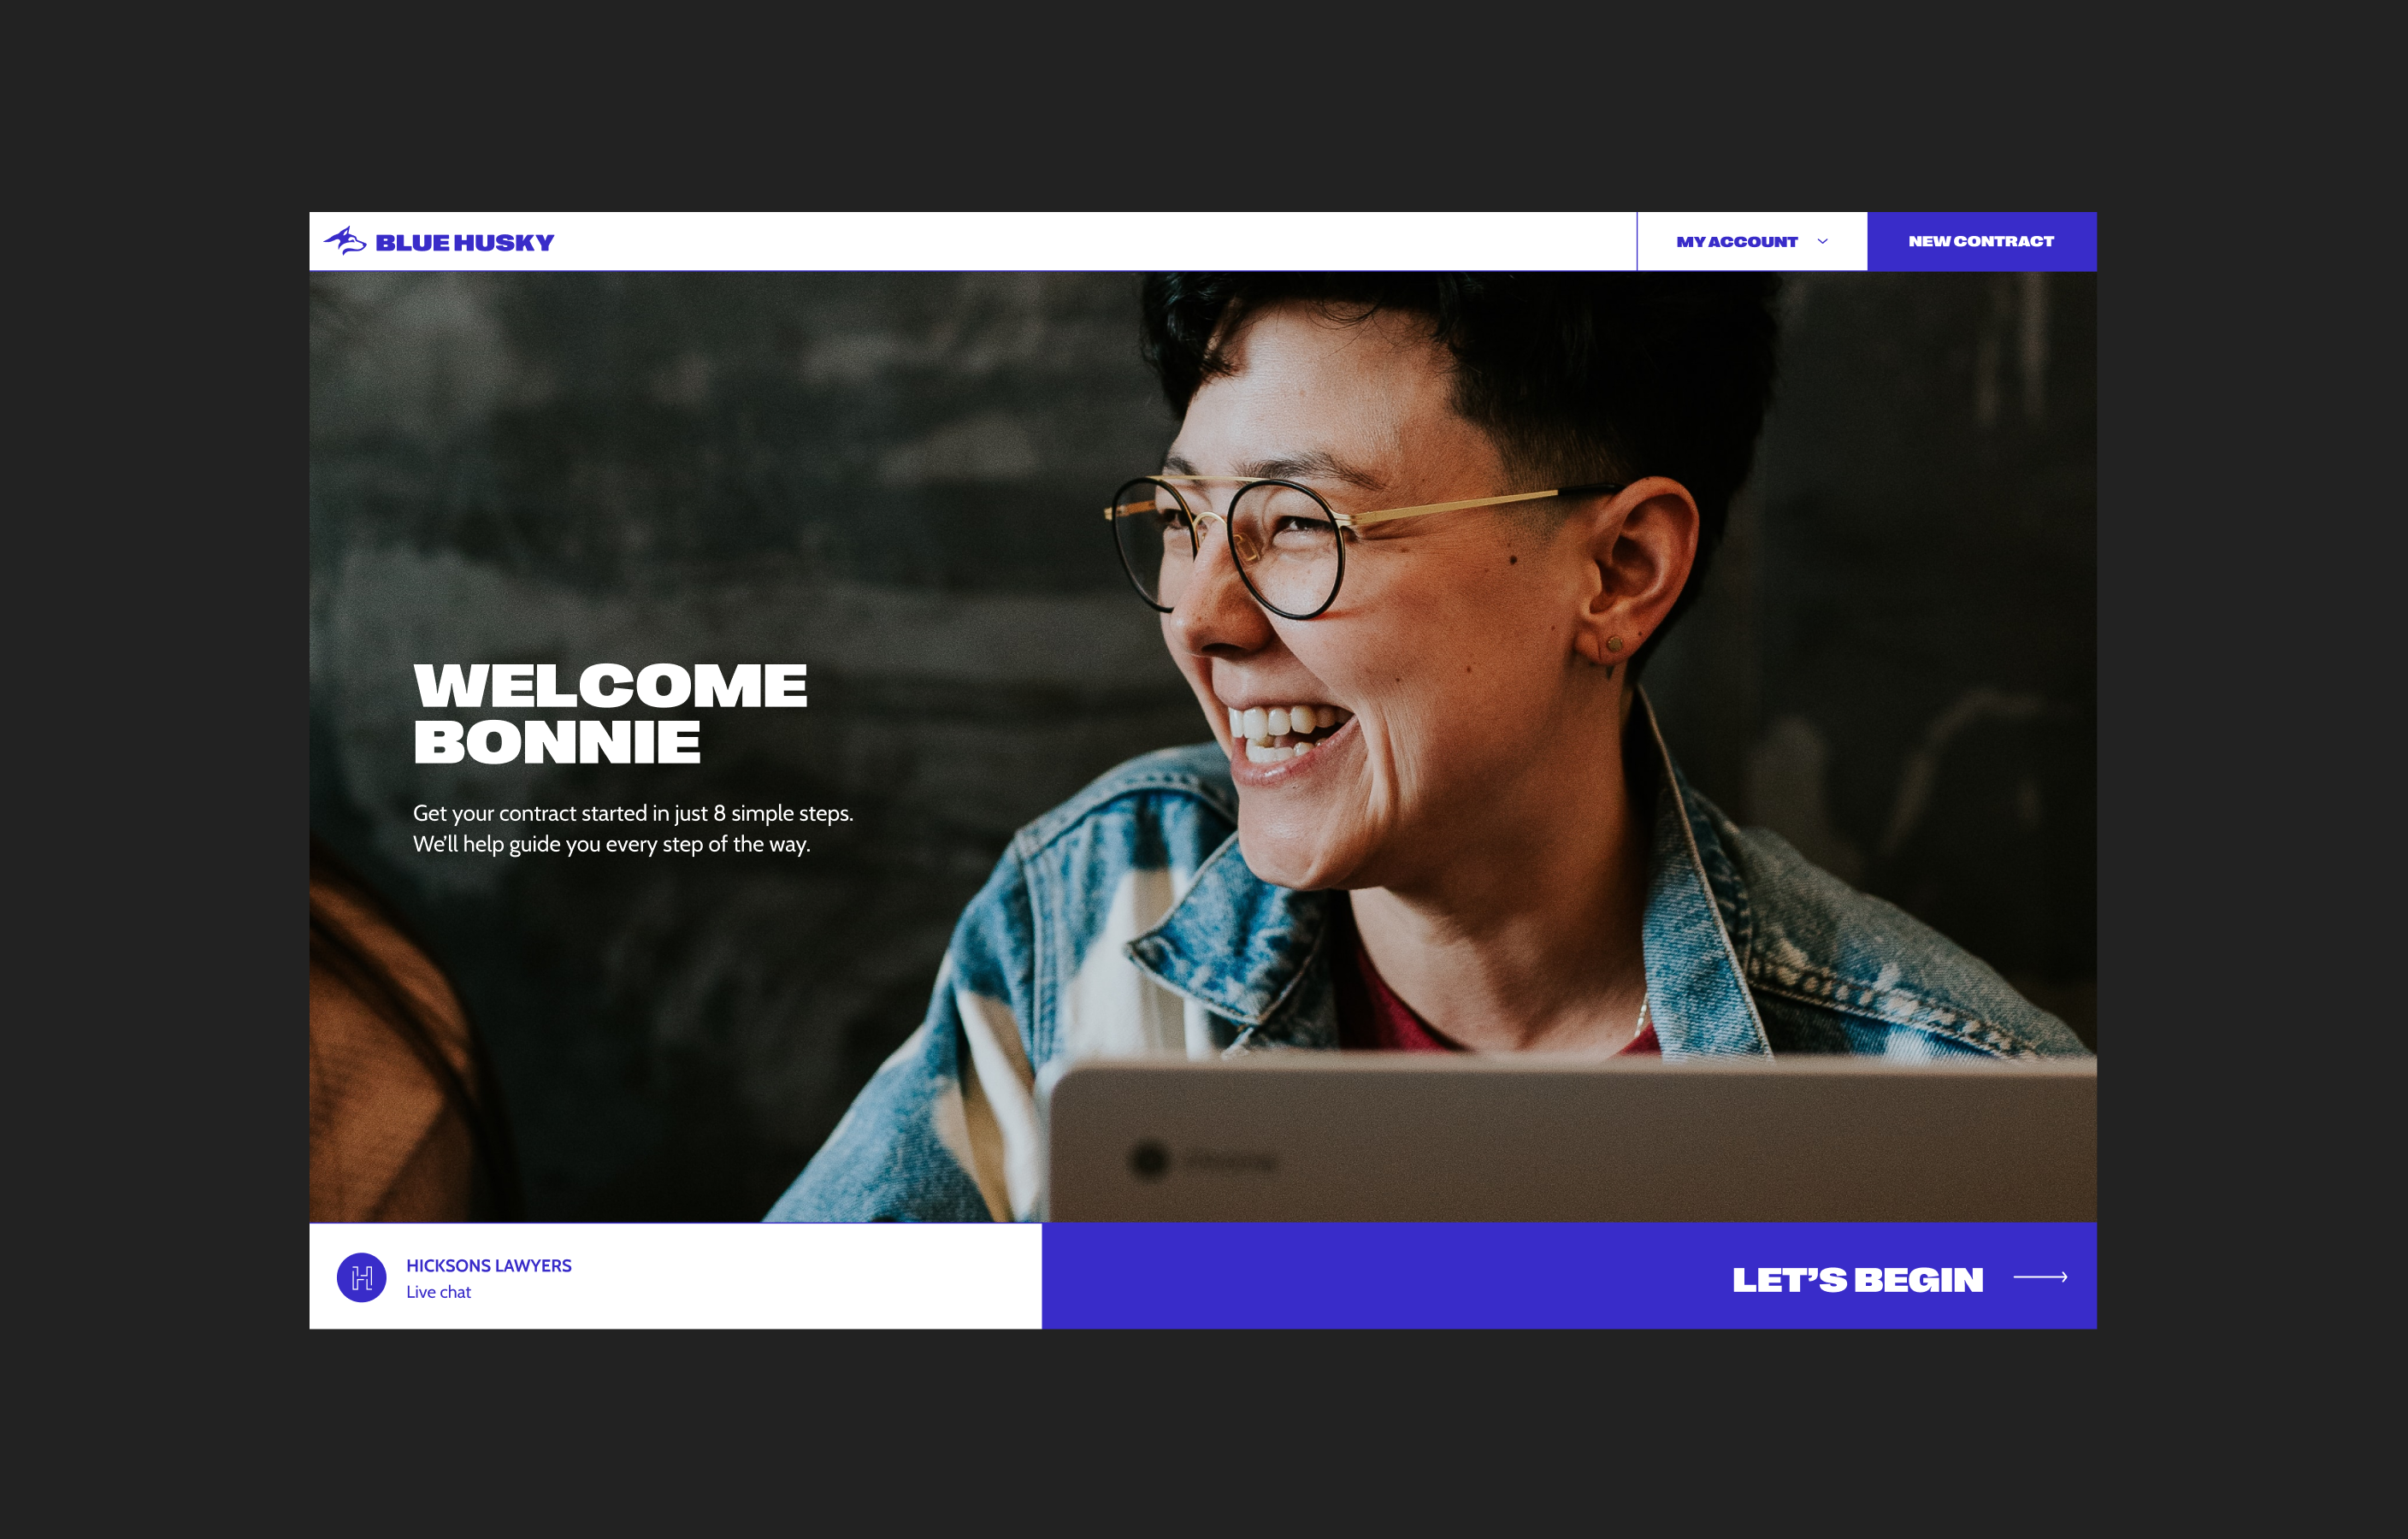 New Blue Husky website desktop design, showcasing a large 'Welcome Bonnie' message